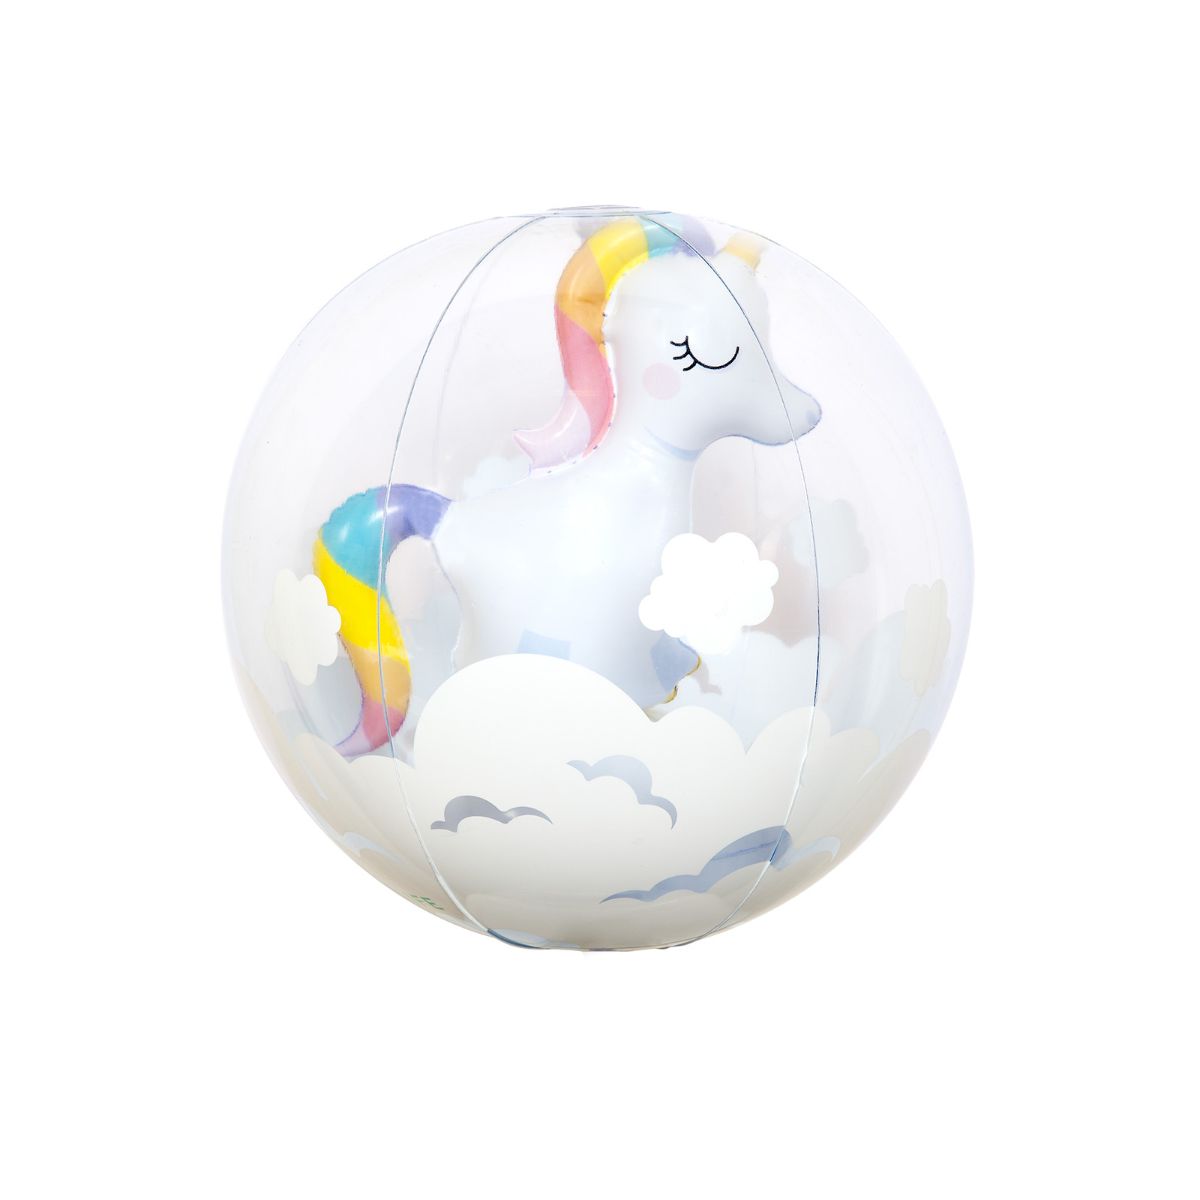 Sport si activitati in aer liber - Minge gonflabila 3D 32 cm Sunnylife Unicorn, hectarul.ro